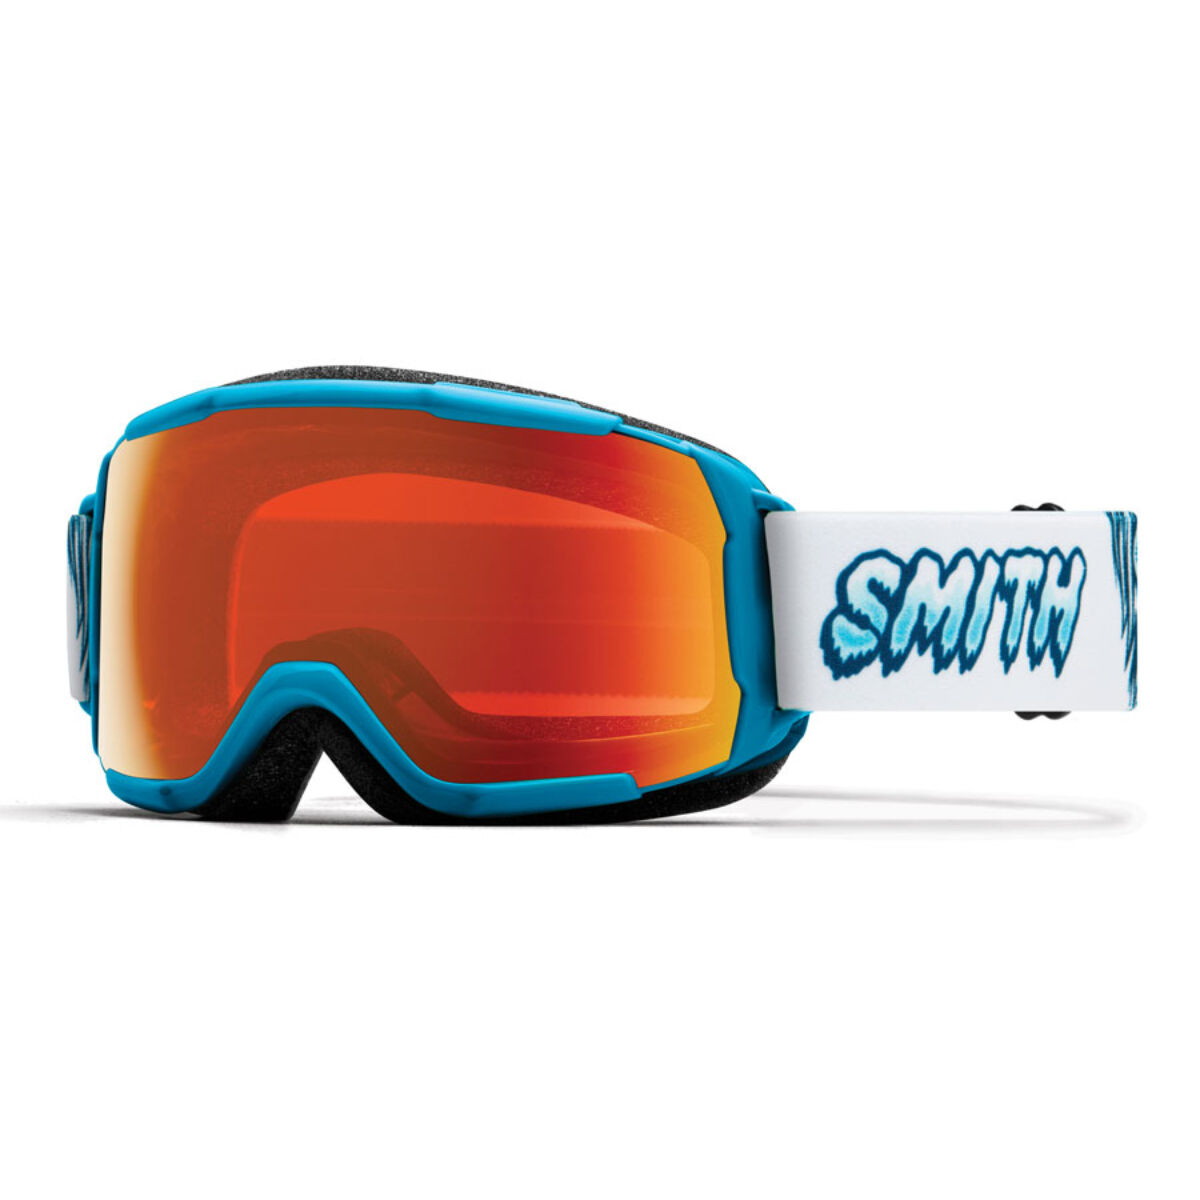 Smith Optics Grom Youth Snow Winter Goggles Teens